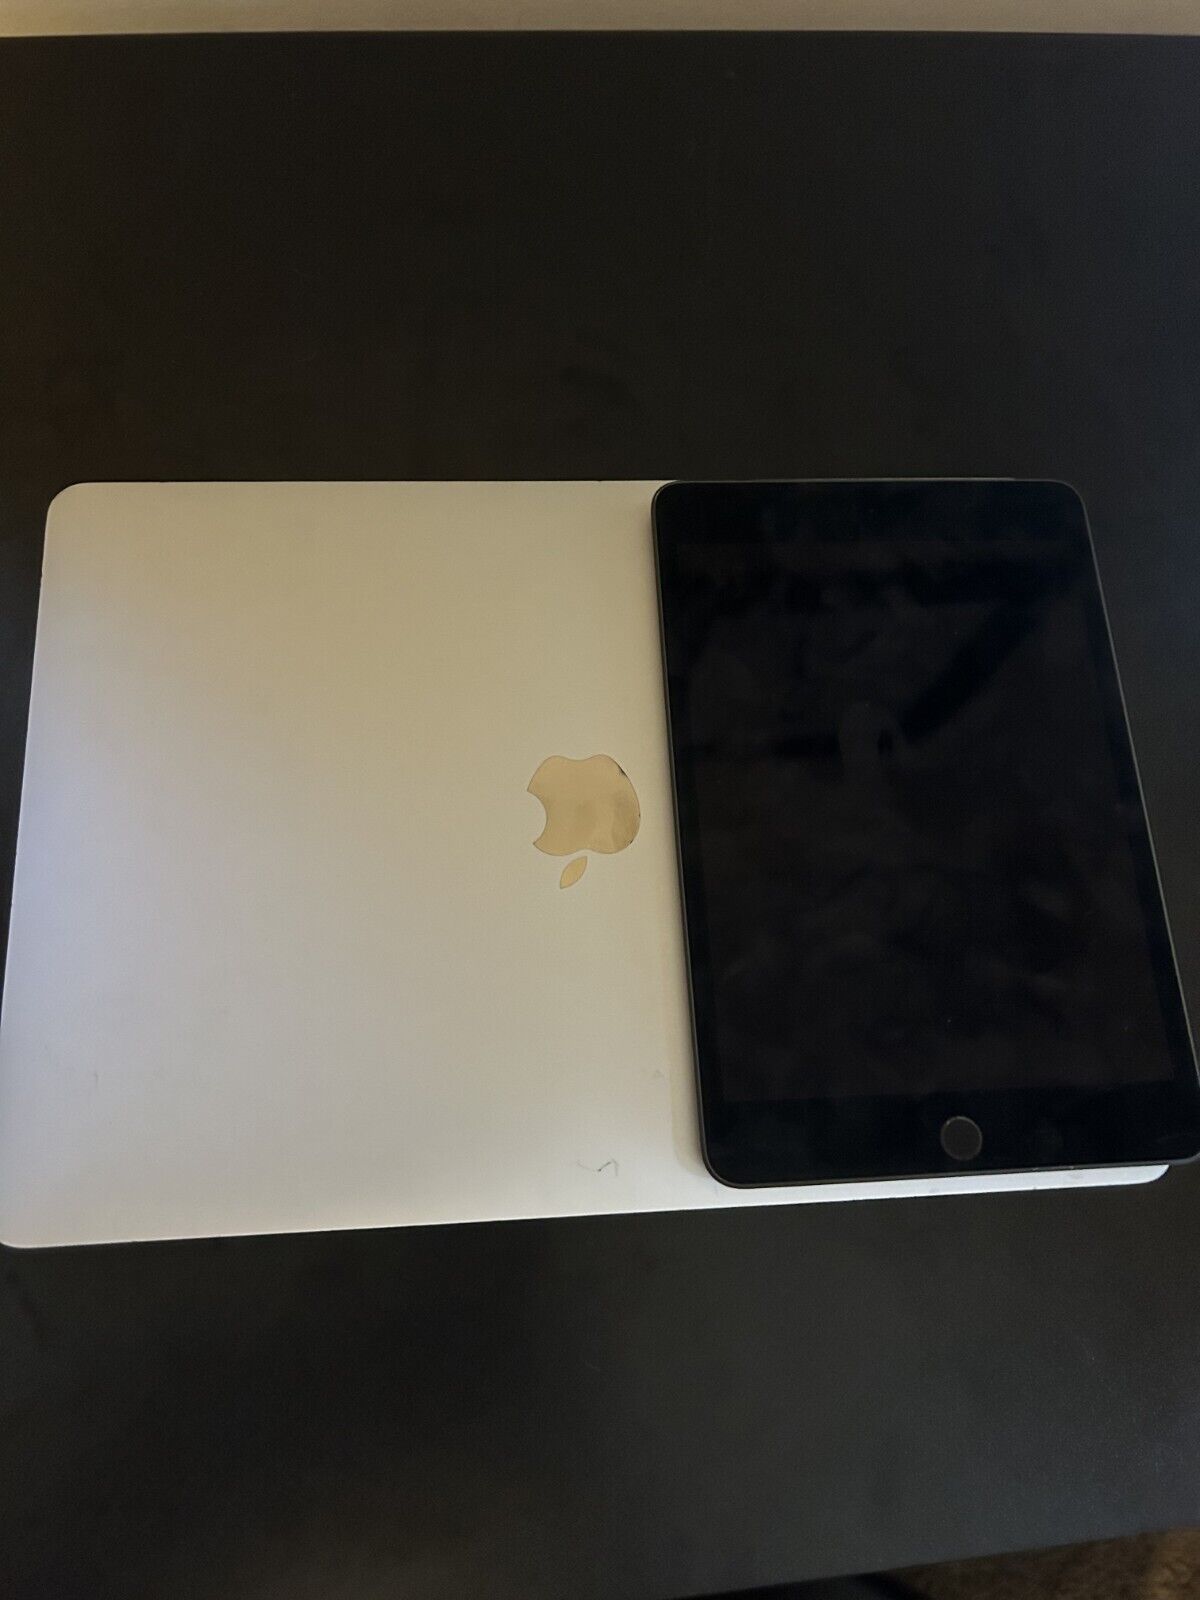 Apple Macbook Pro 2020 - iPad mini 5th gen (Both Activation Locked) Lot